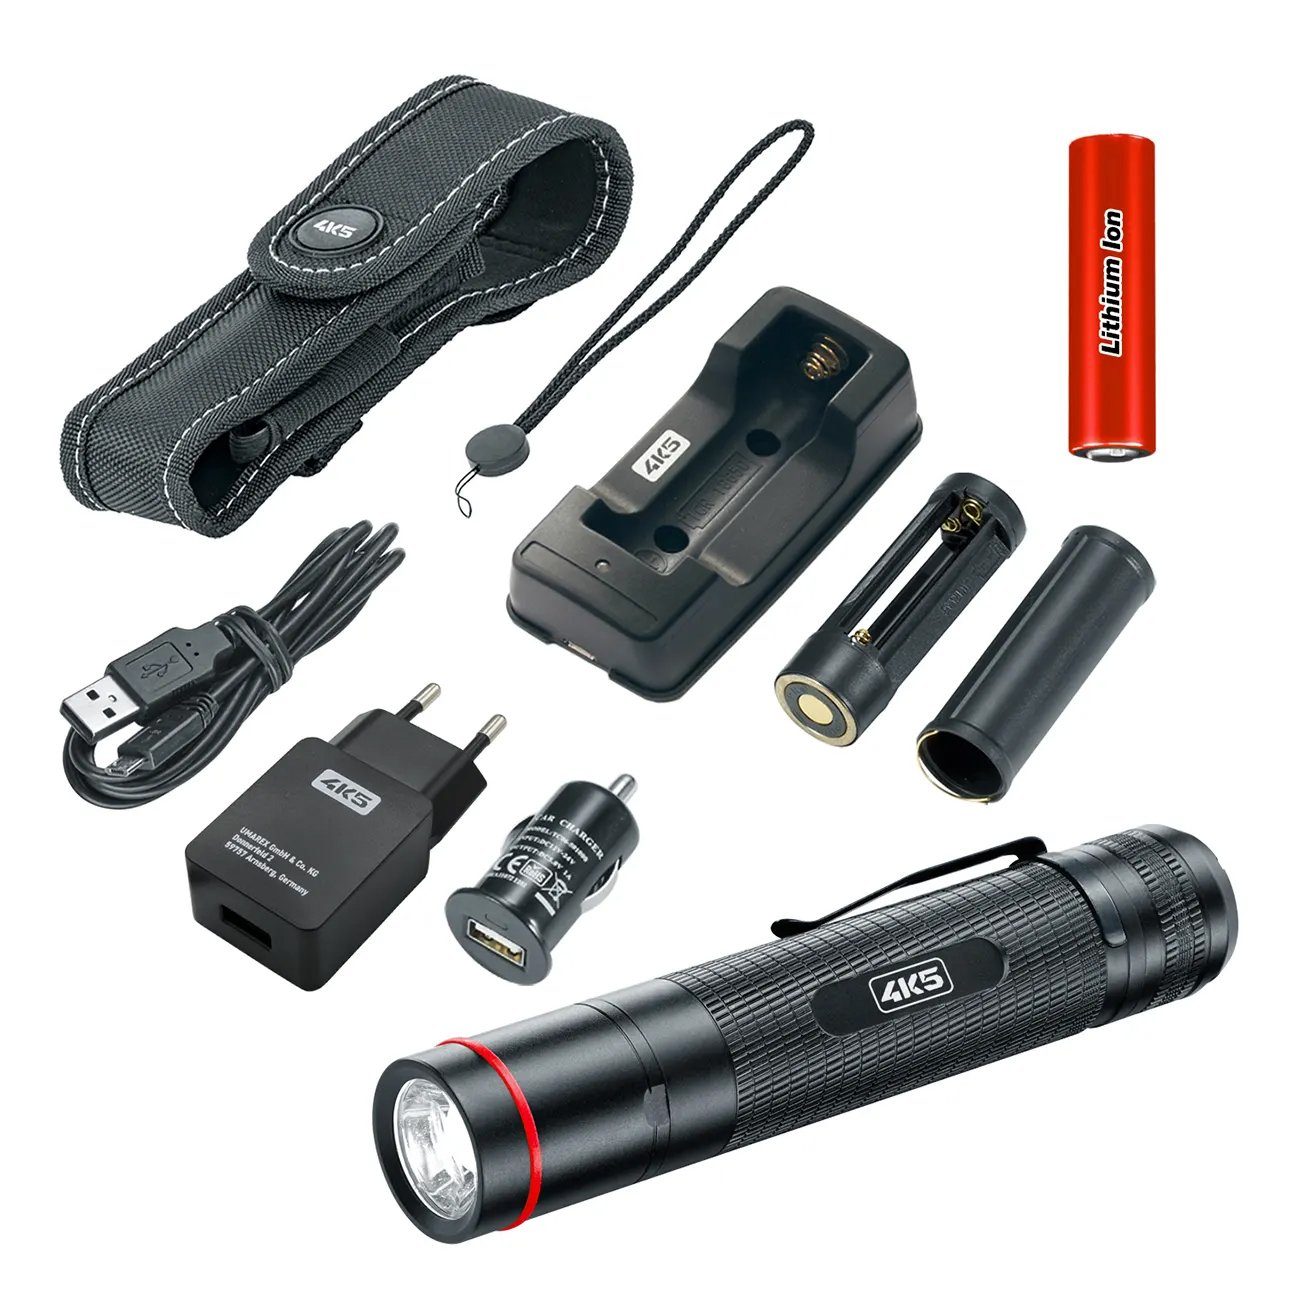 4K5 Tools Taschenlampe 4K5 Tools PL 900 Prolight Taschenlampe mit Holster (Leuchtkraft 900